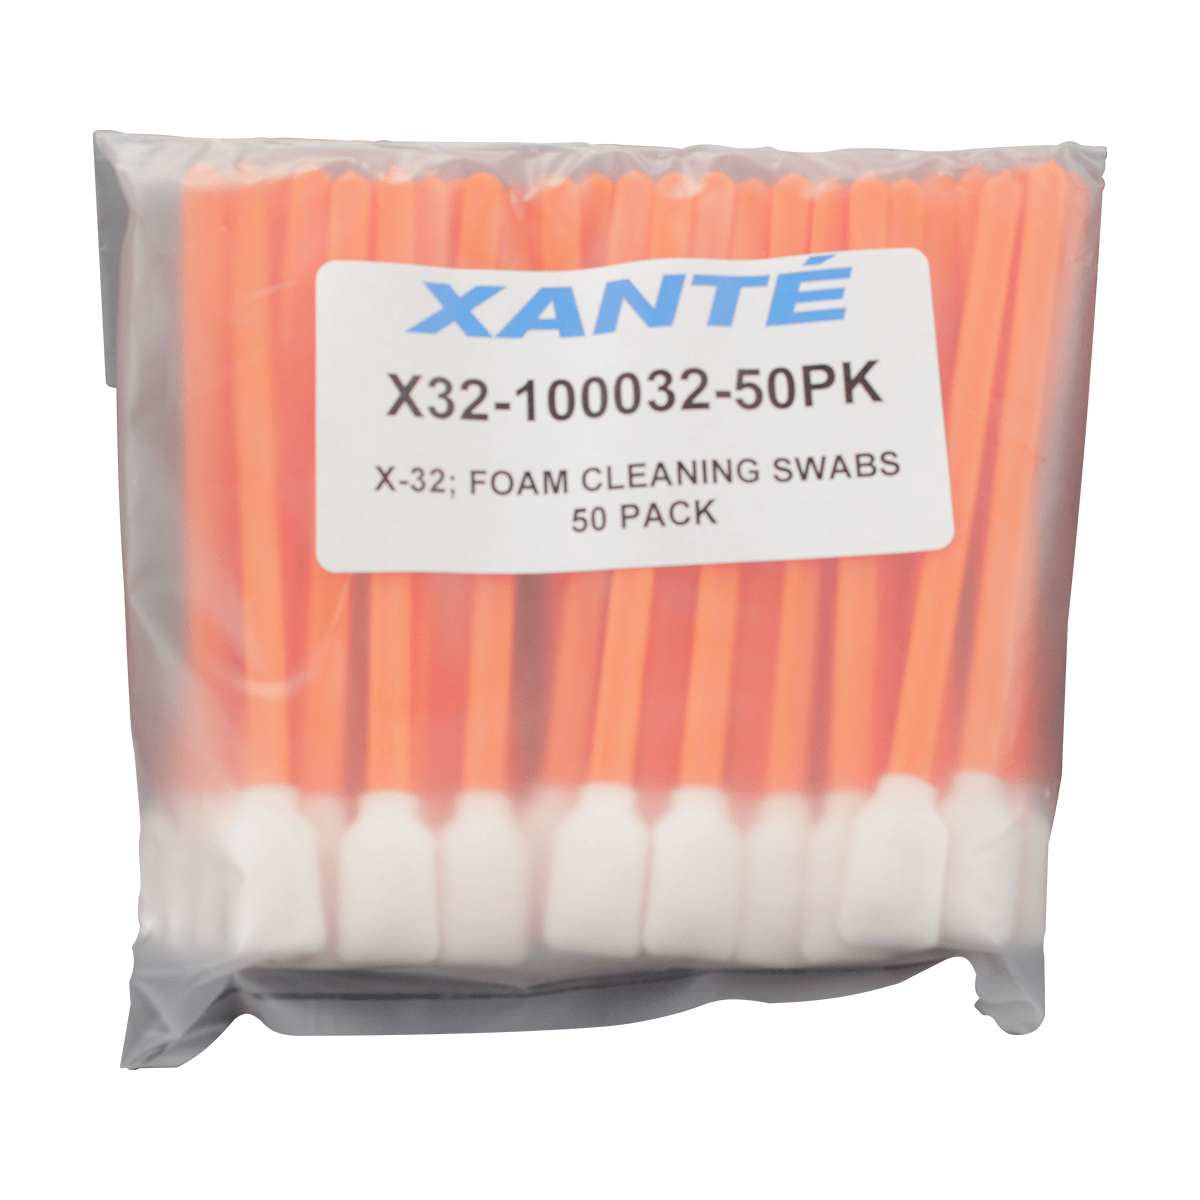 Xante X-16 X-33 X-32 Foam Cleaning Swabs (50 pack) X32-100032-50PK